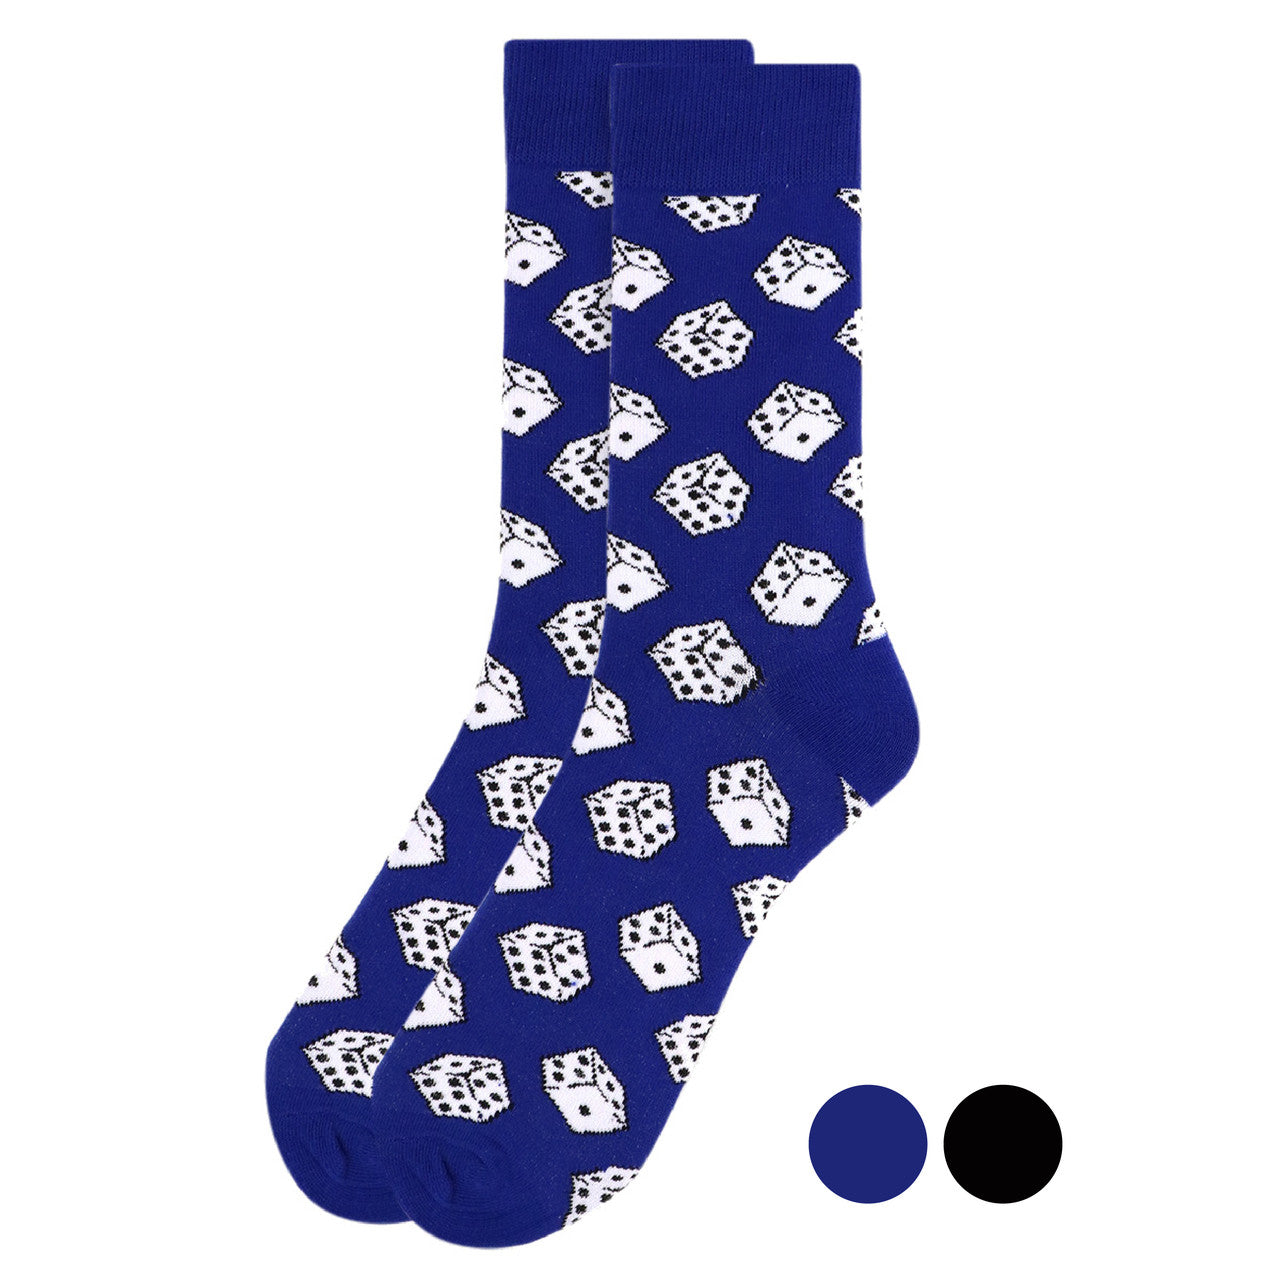 Selini New York - Socks Men's Dice Novelty